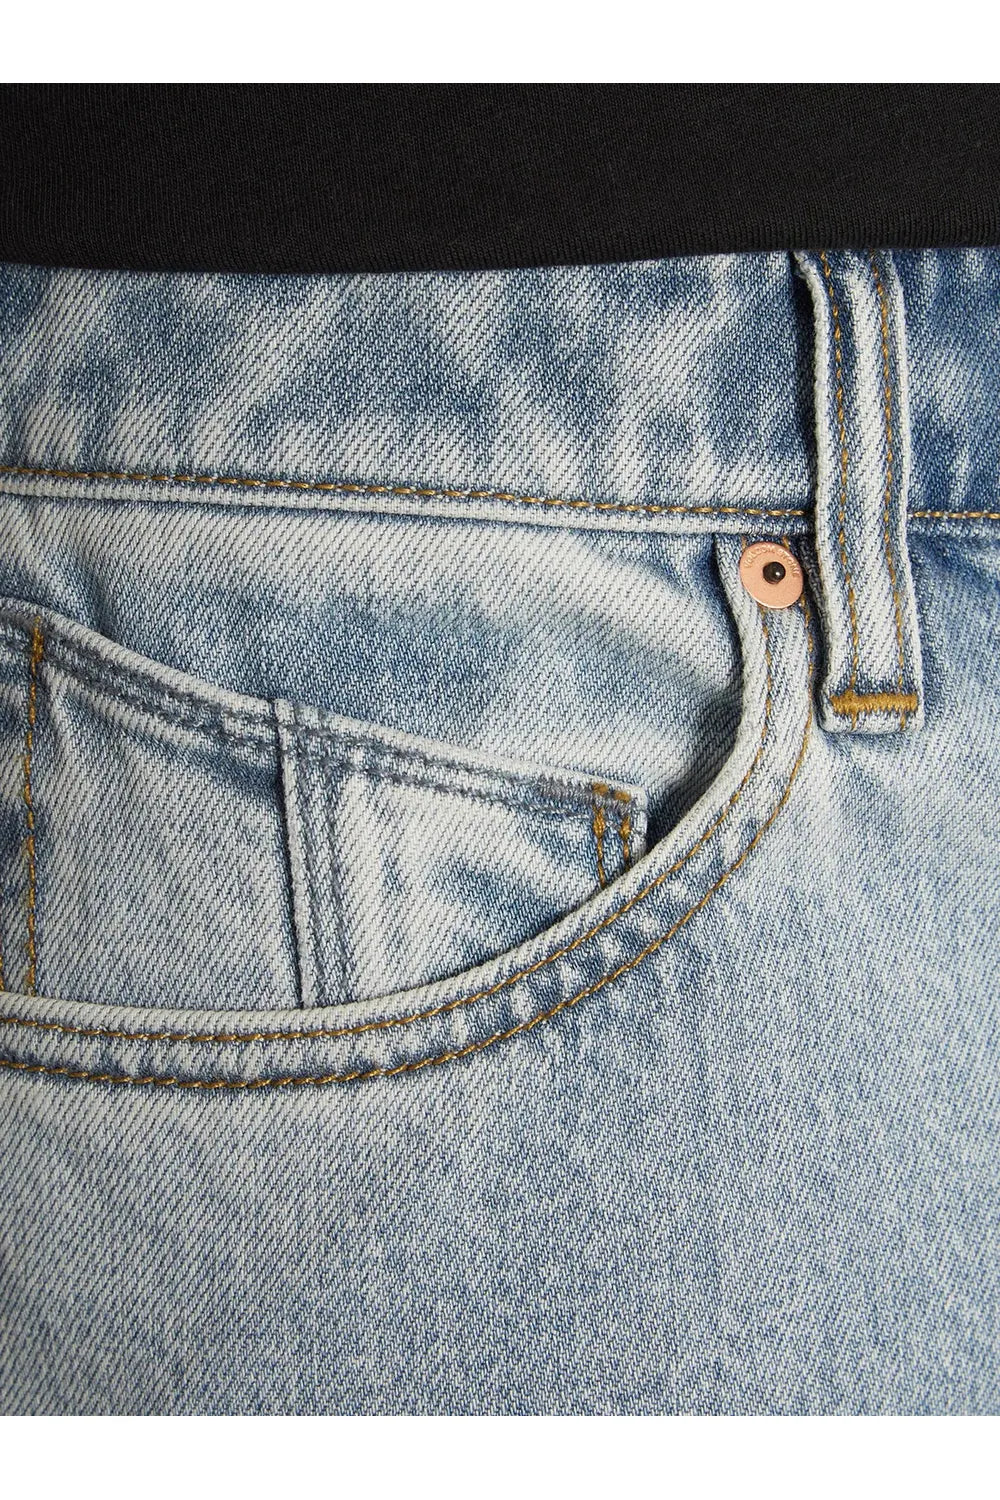 Volcom Solver Denim Jeans Heavy Worn Faded